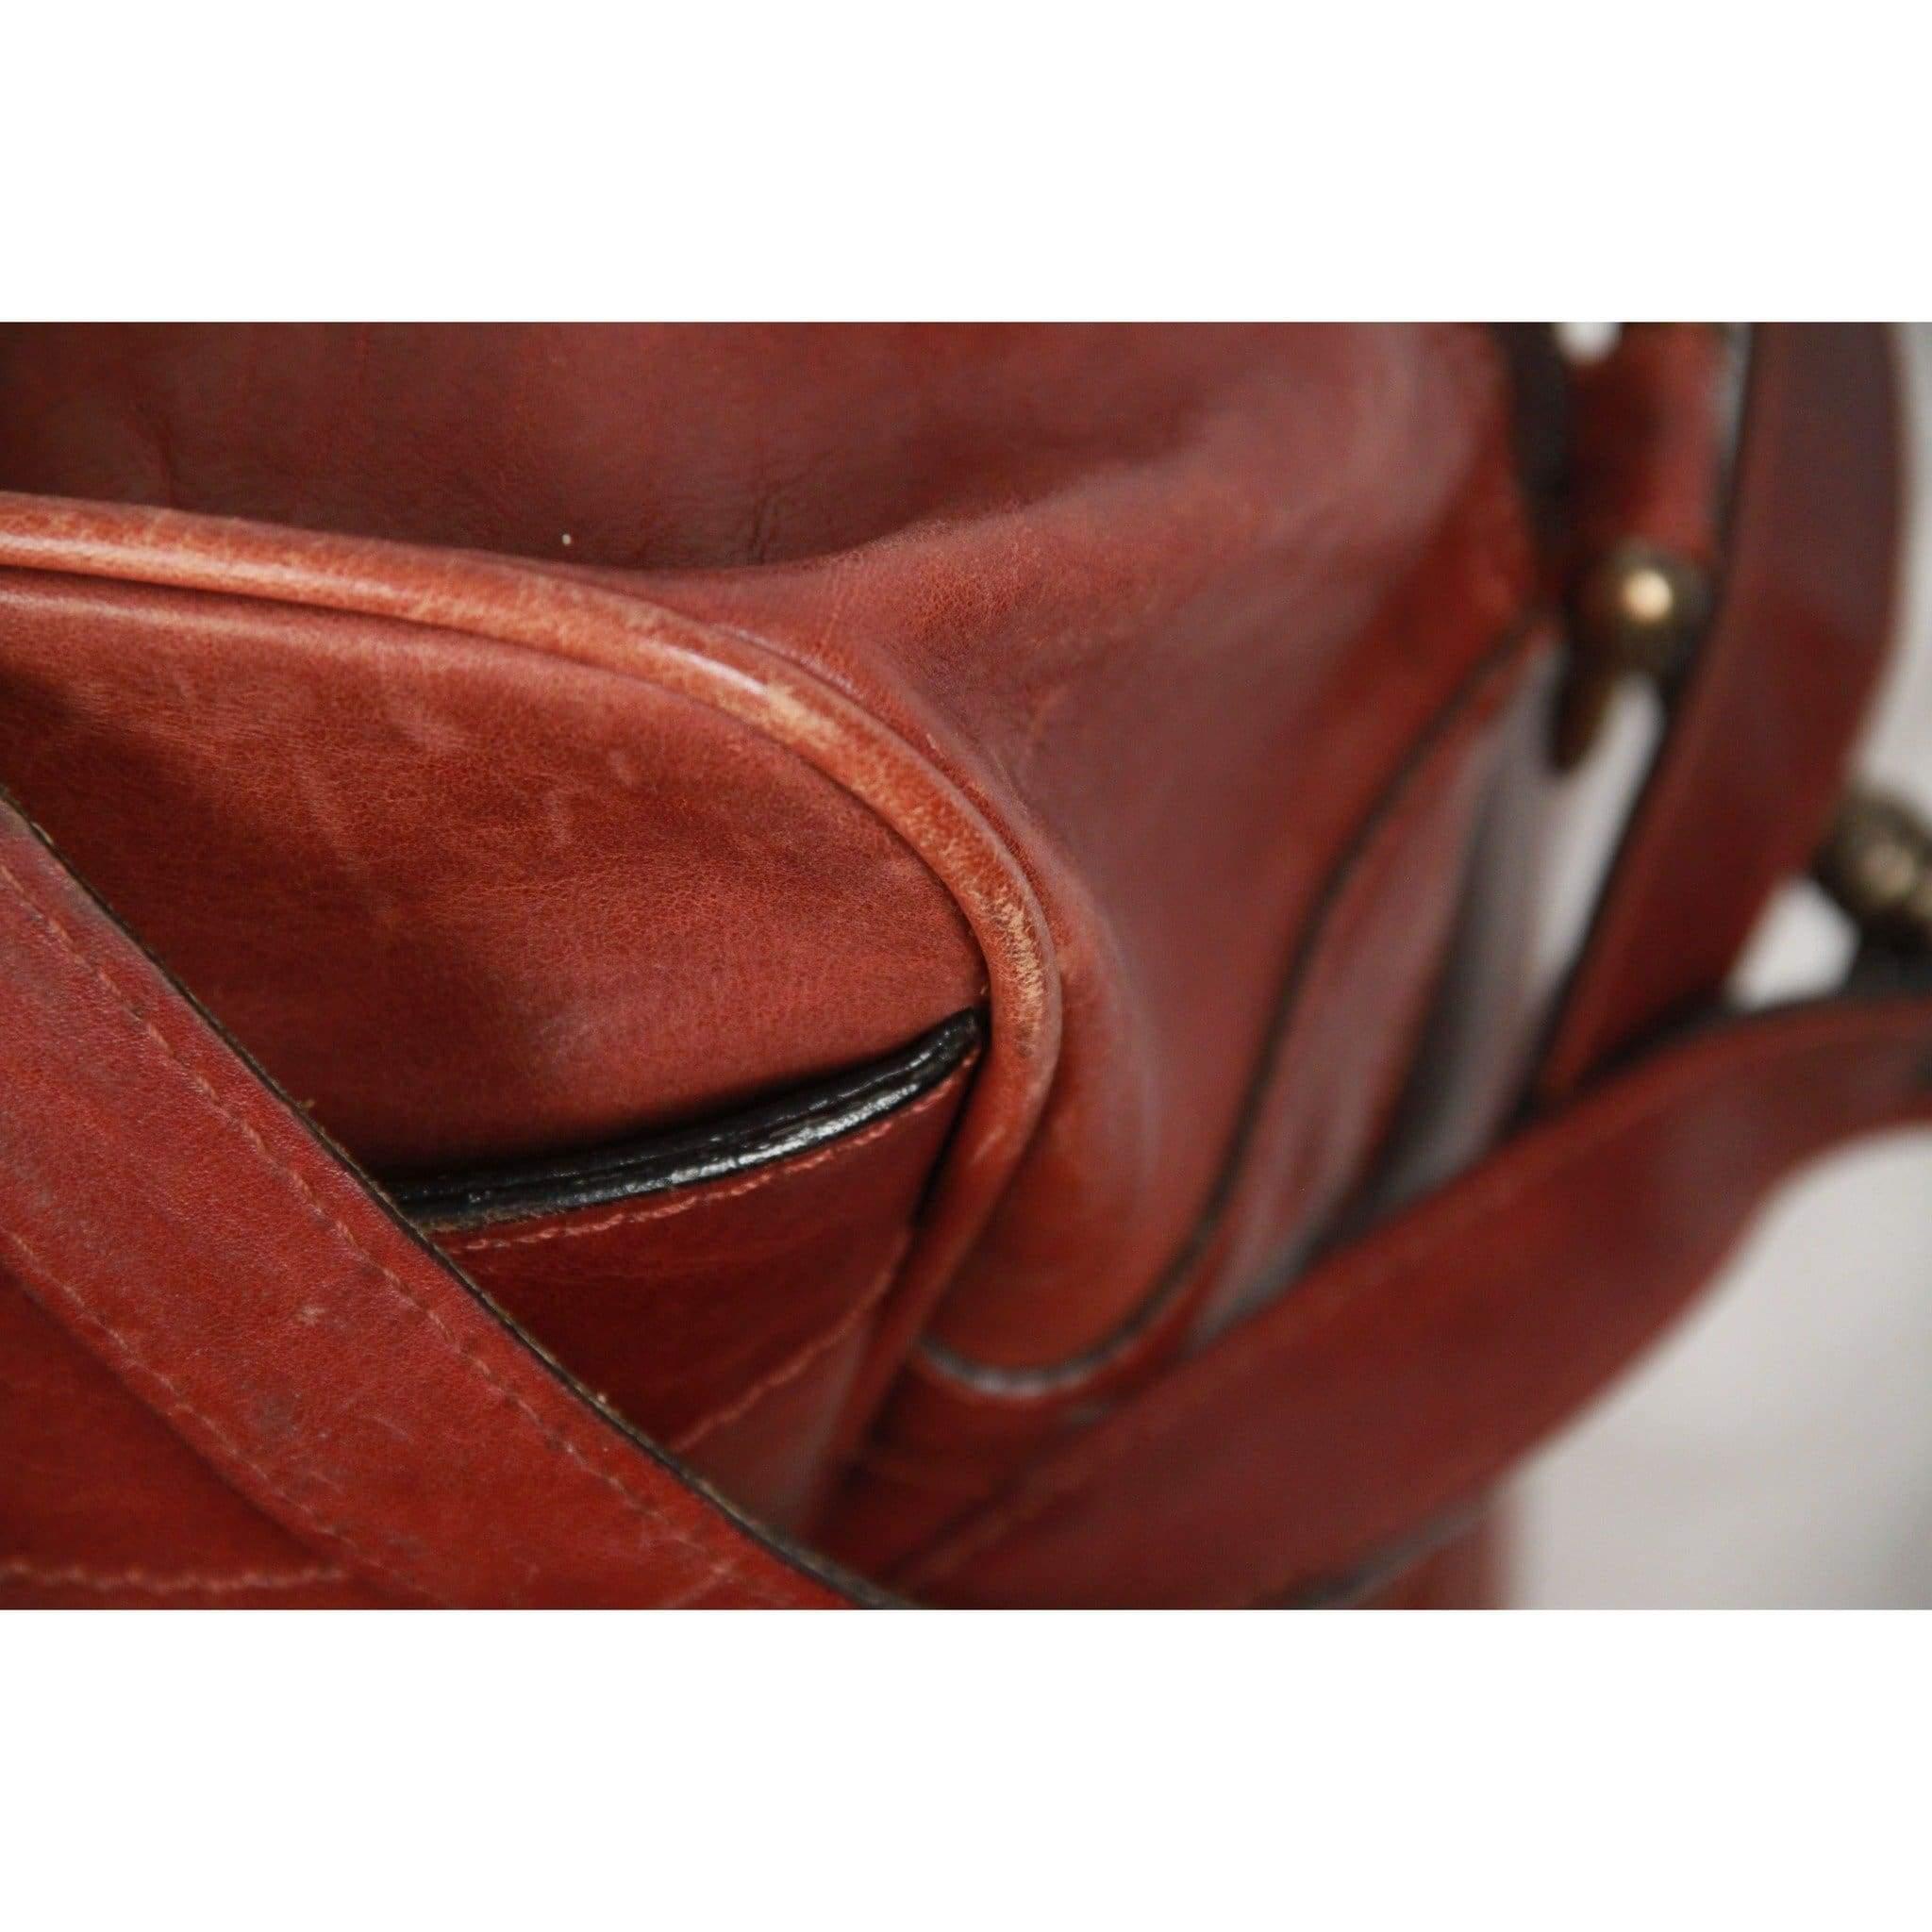 ALDO RAFFA Brown Leather DUFFLE TRAVEL BAG Carry On 1